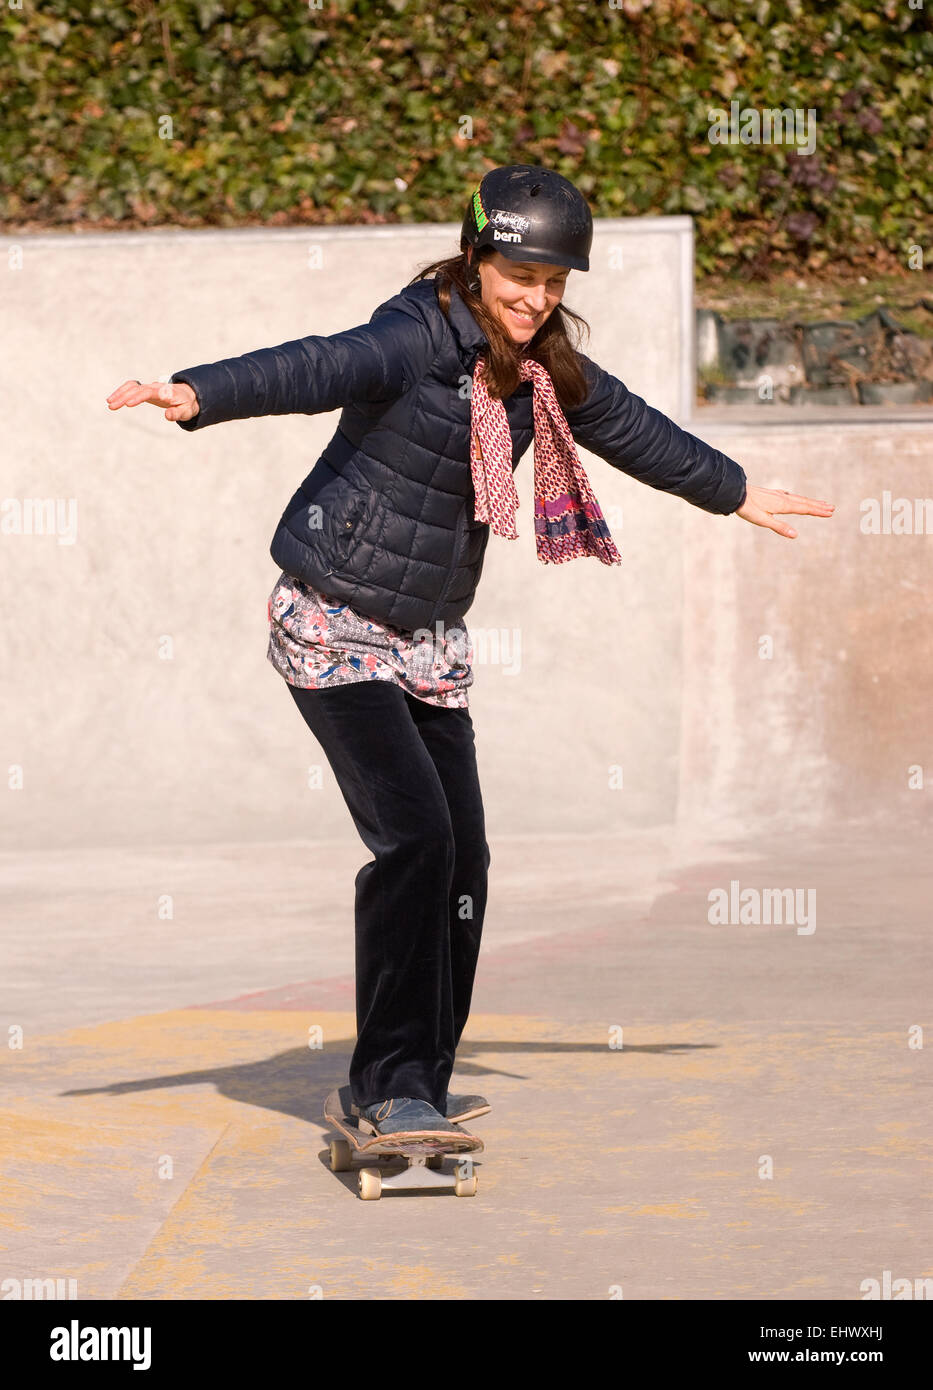 Woman having fun at a skate park, Haslemere, Surrey, UK. Stock Photo